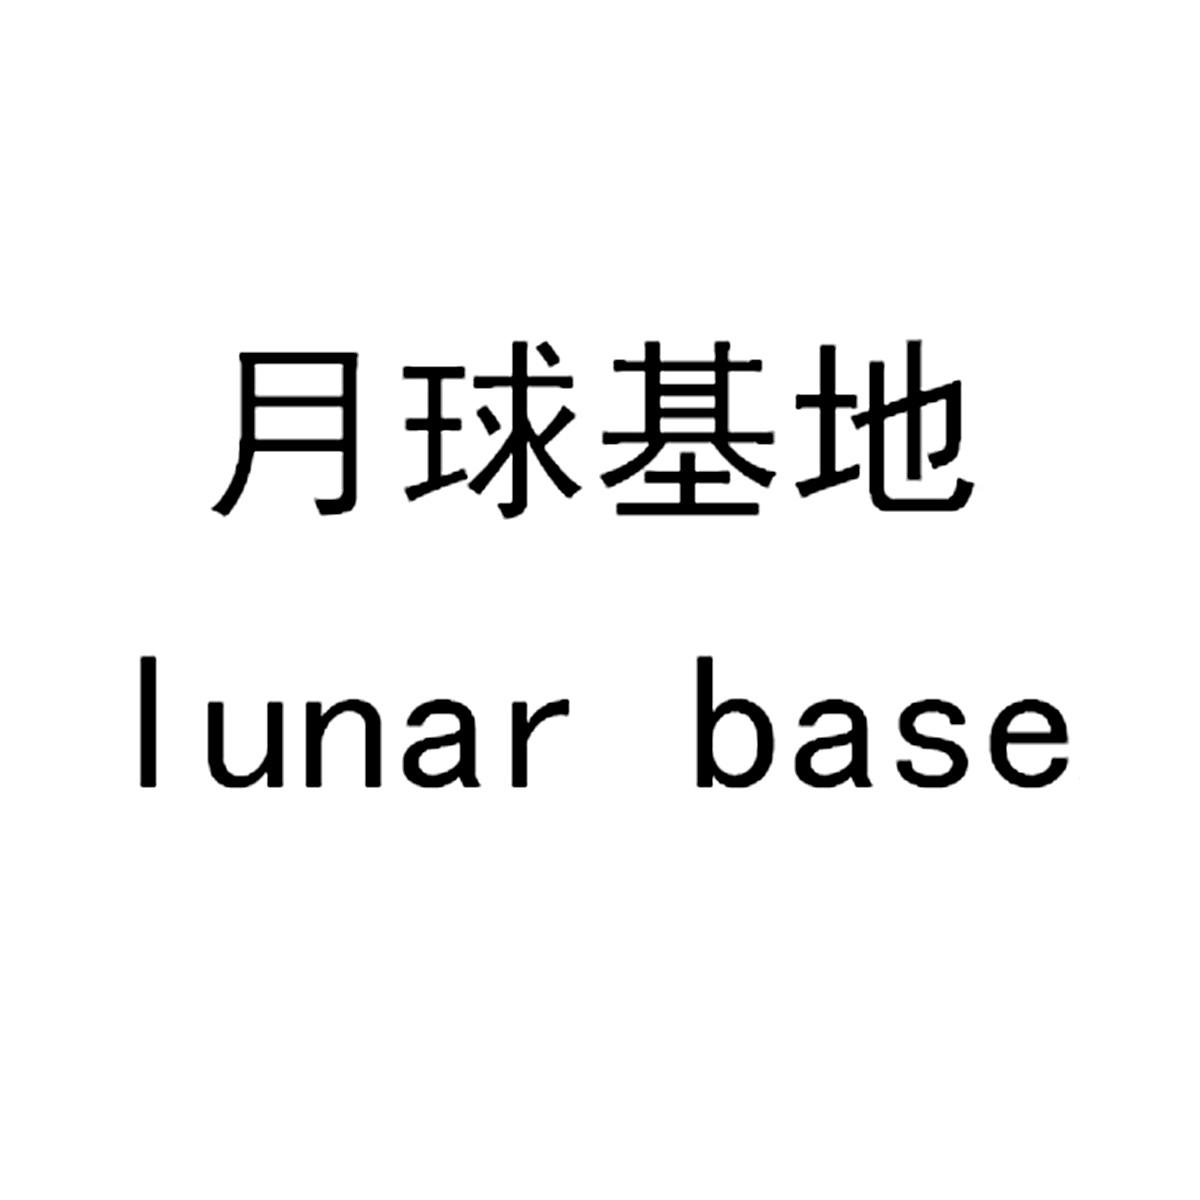 月球基地 LUNAR BASE日化用品